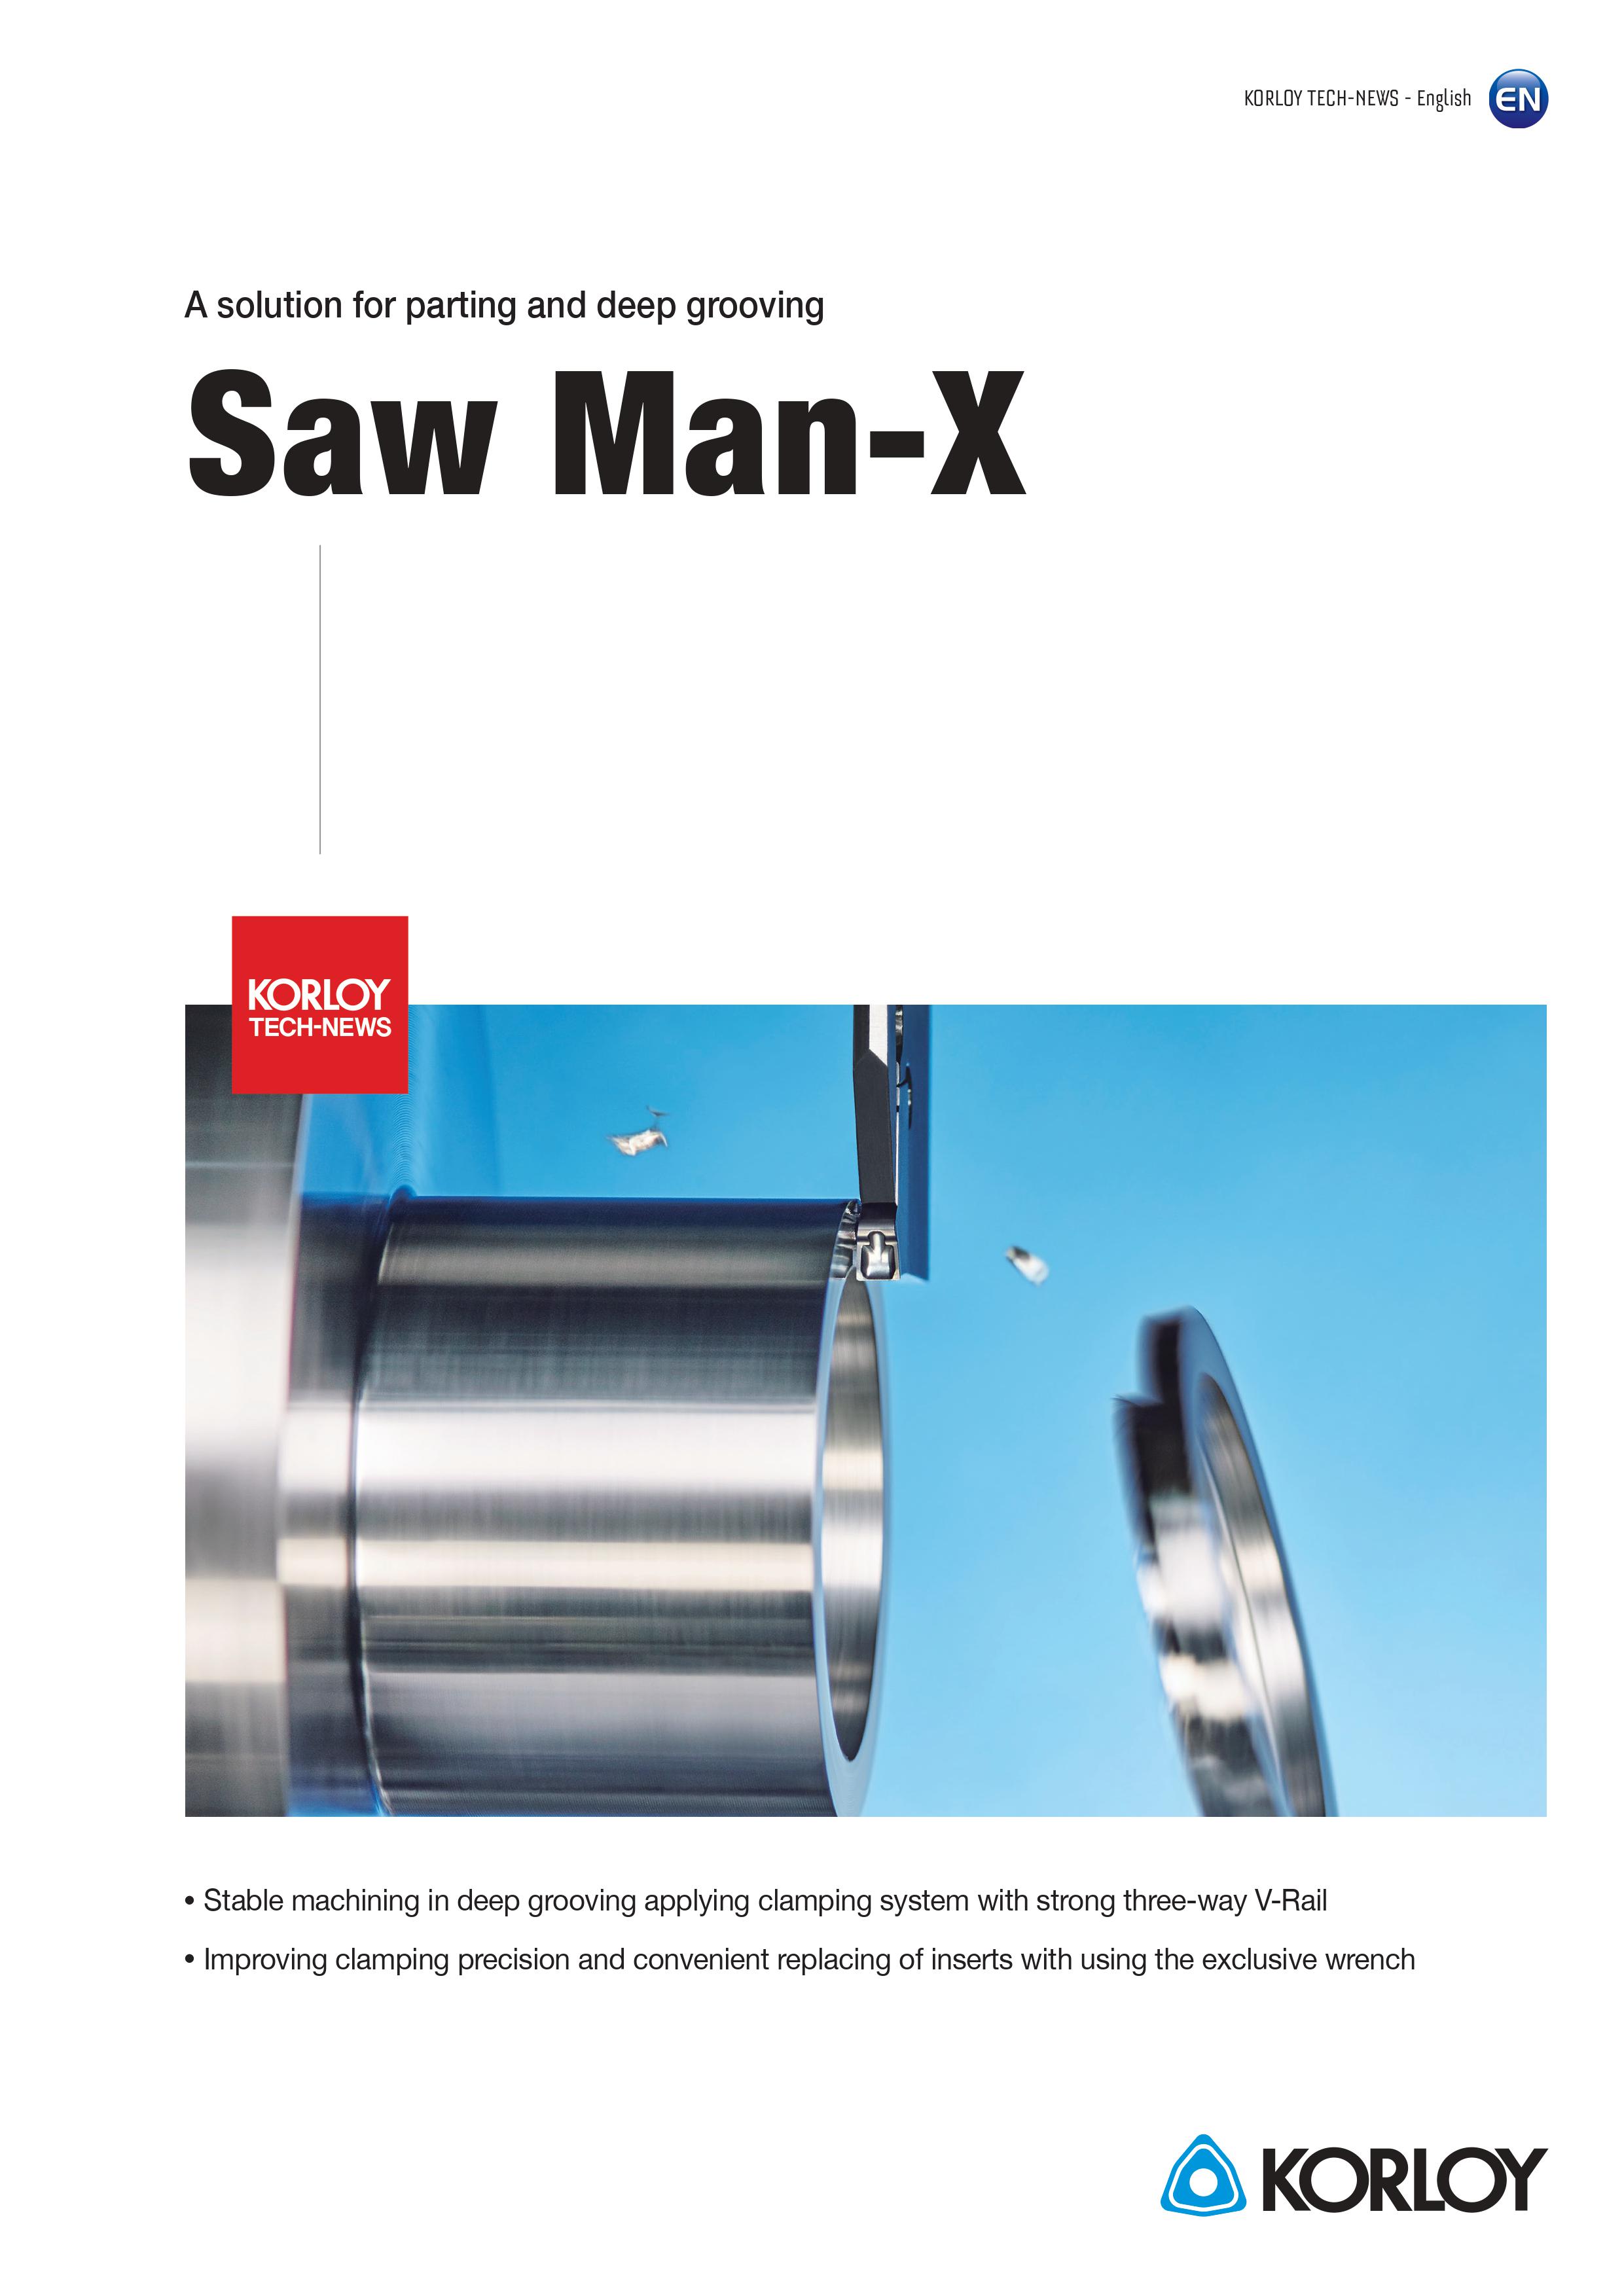 Saw Man-X